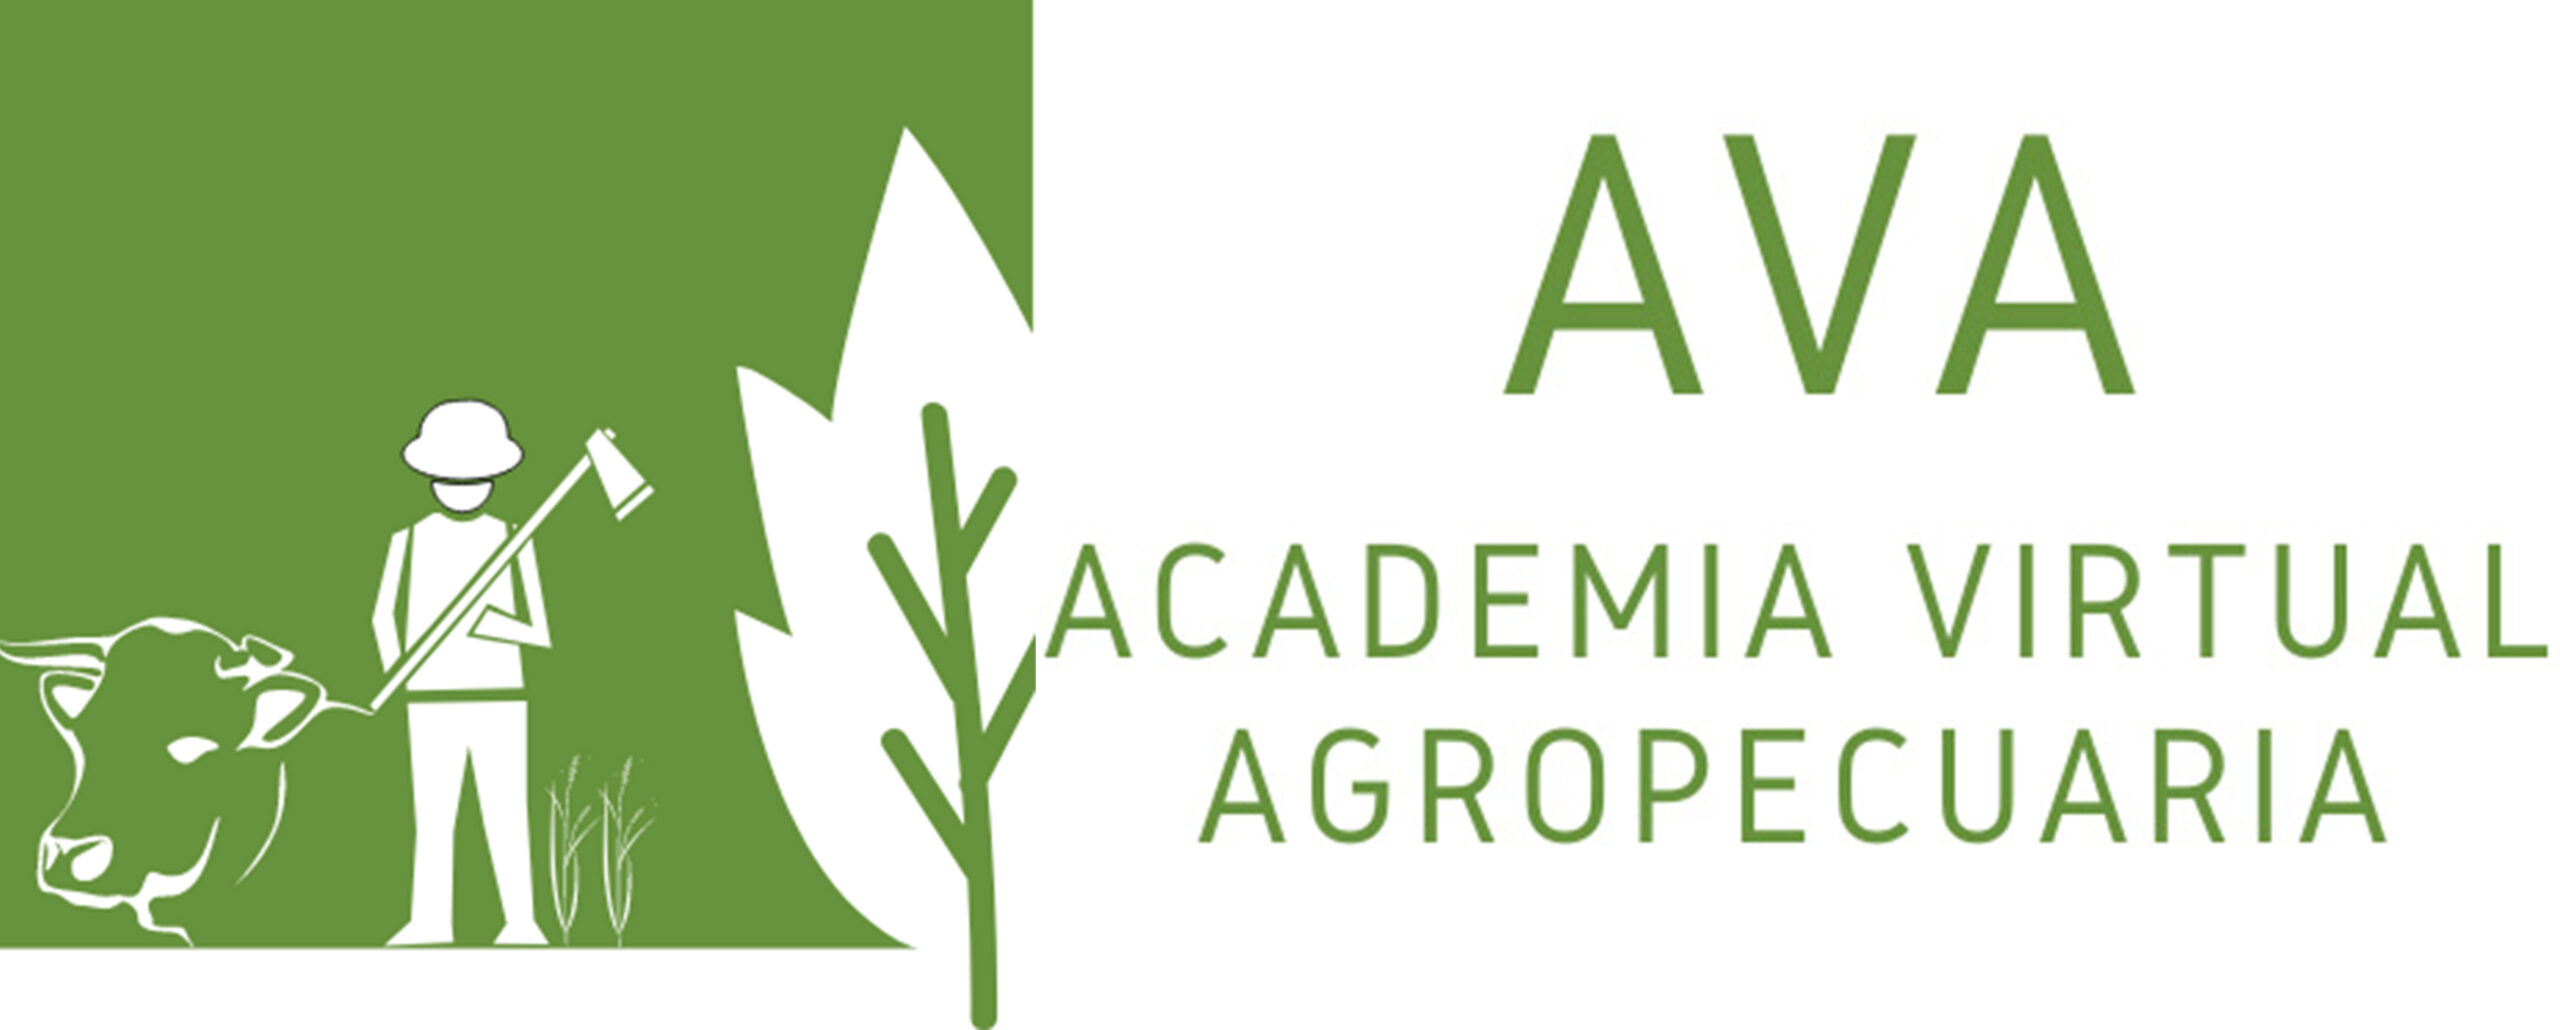 Academia Virtual Agropecuaria